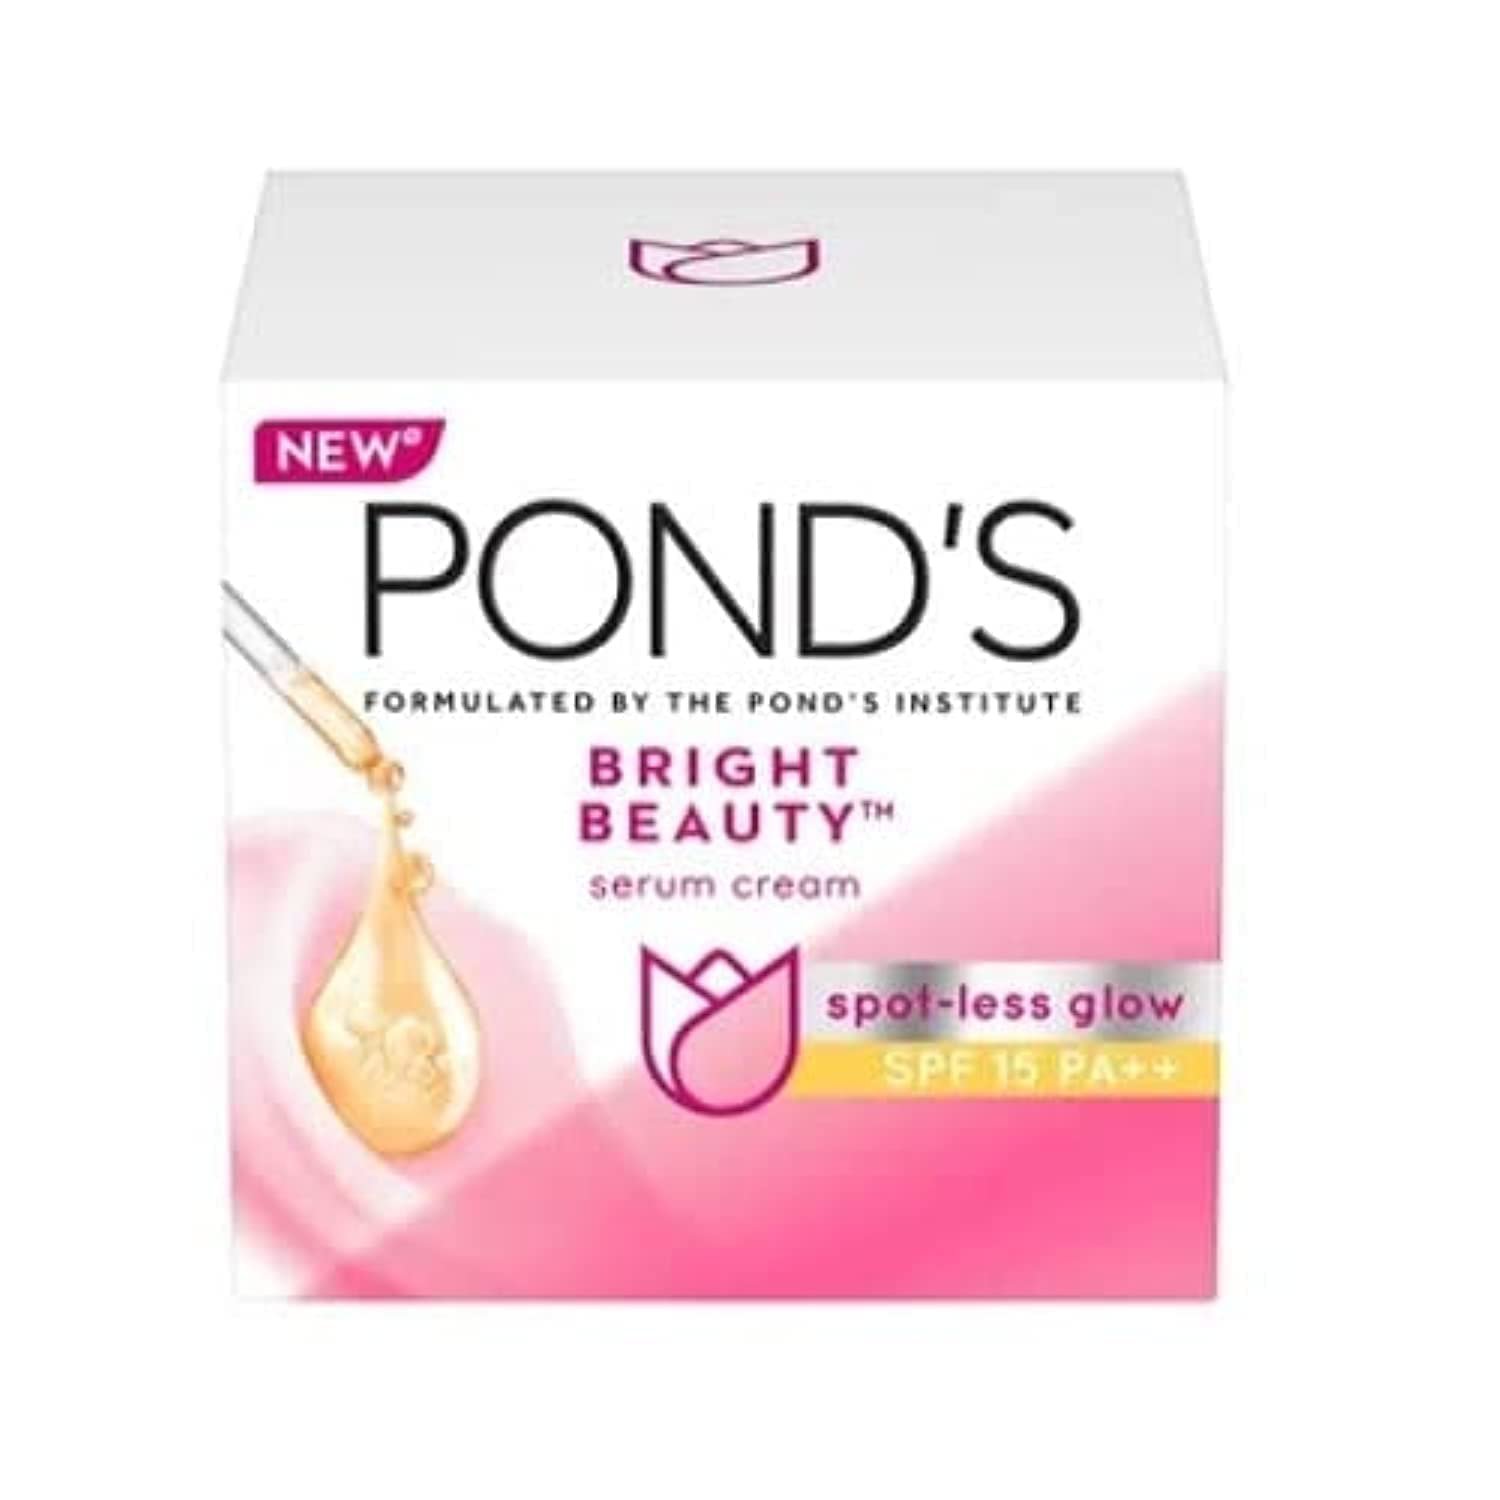 POND'S Bright Beauty SPF 15 Day Cream 50 gm